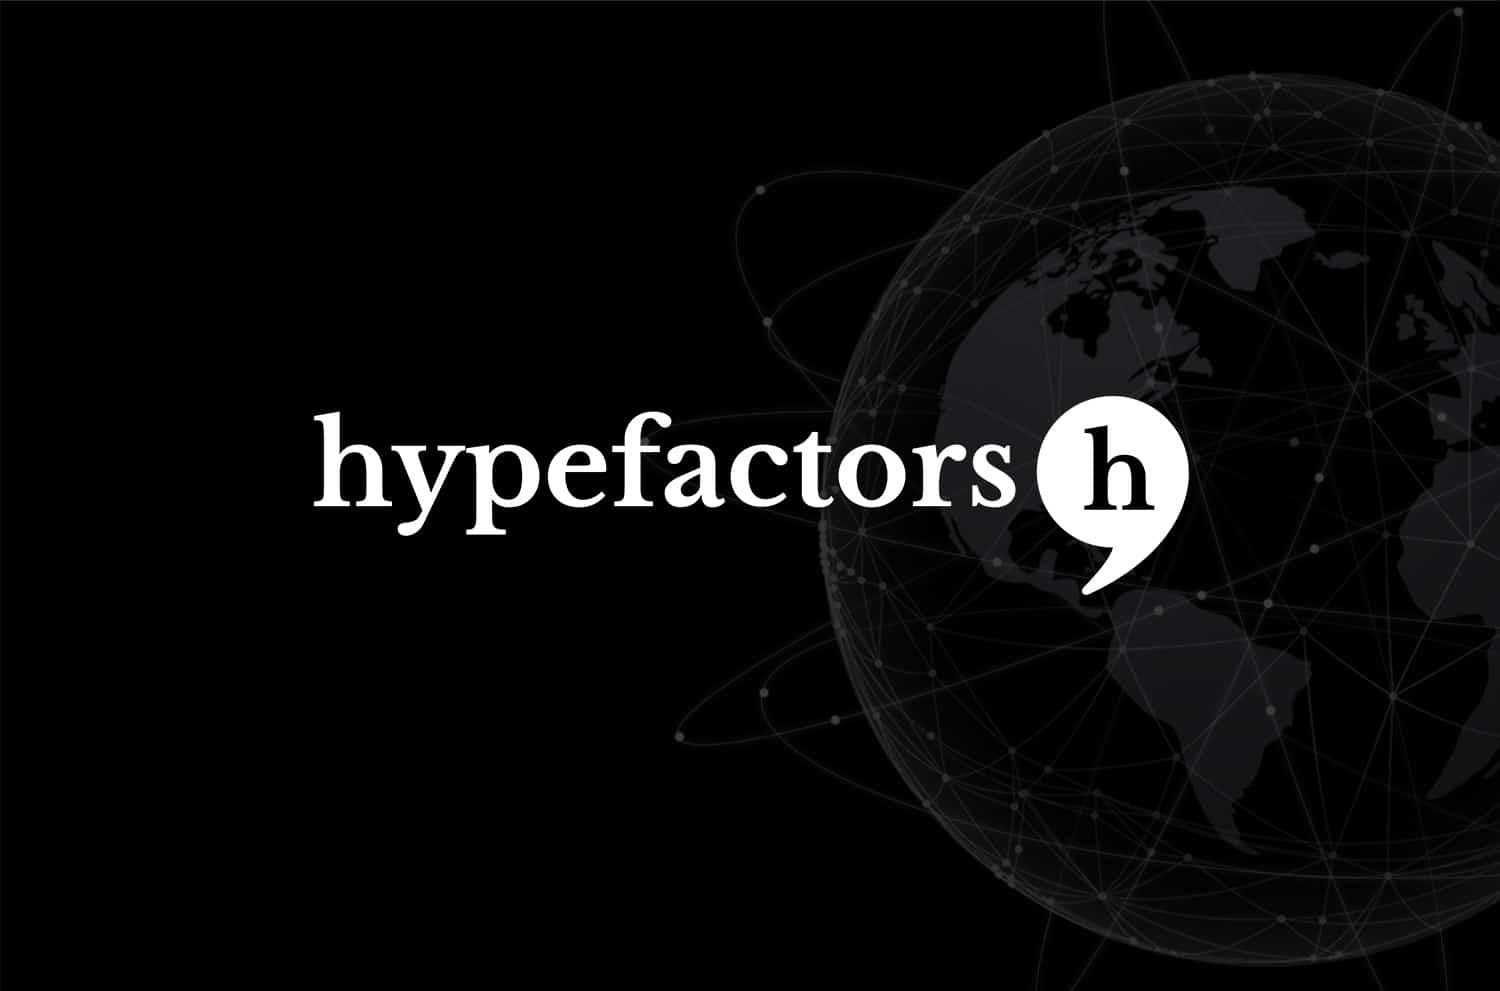 Hypefactors med ny stor teknologisk upgrade